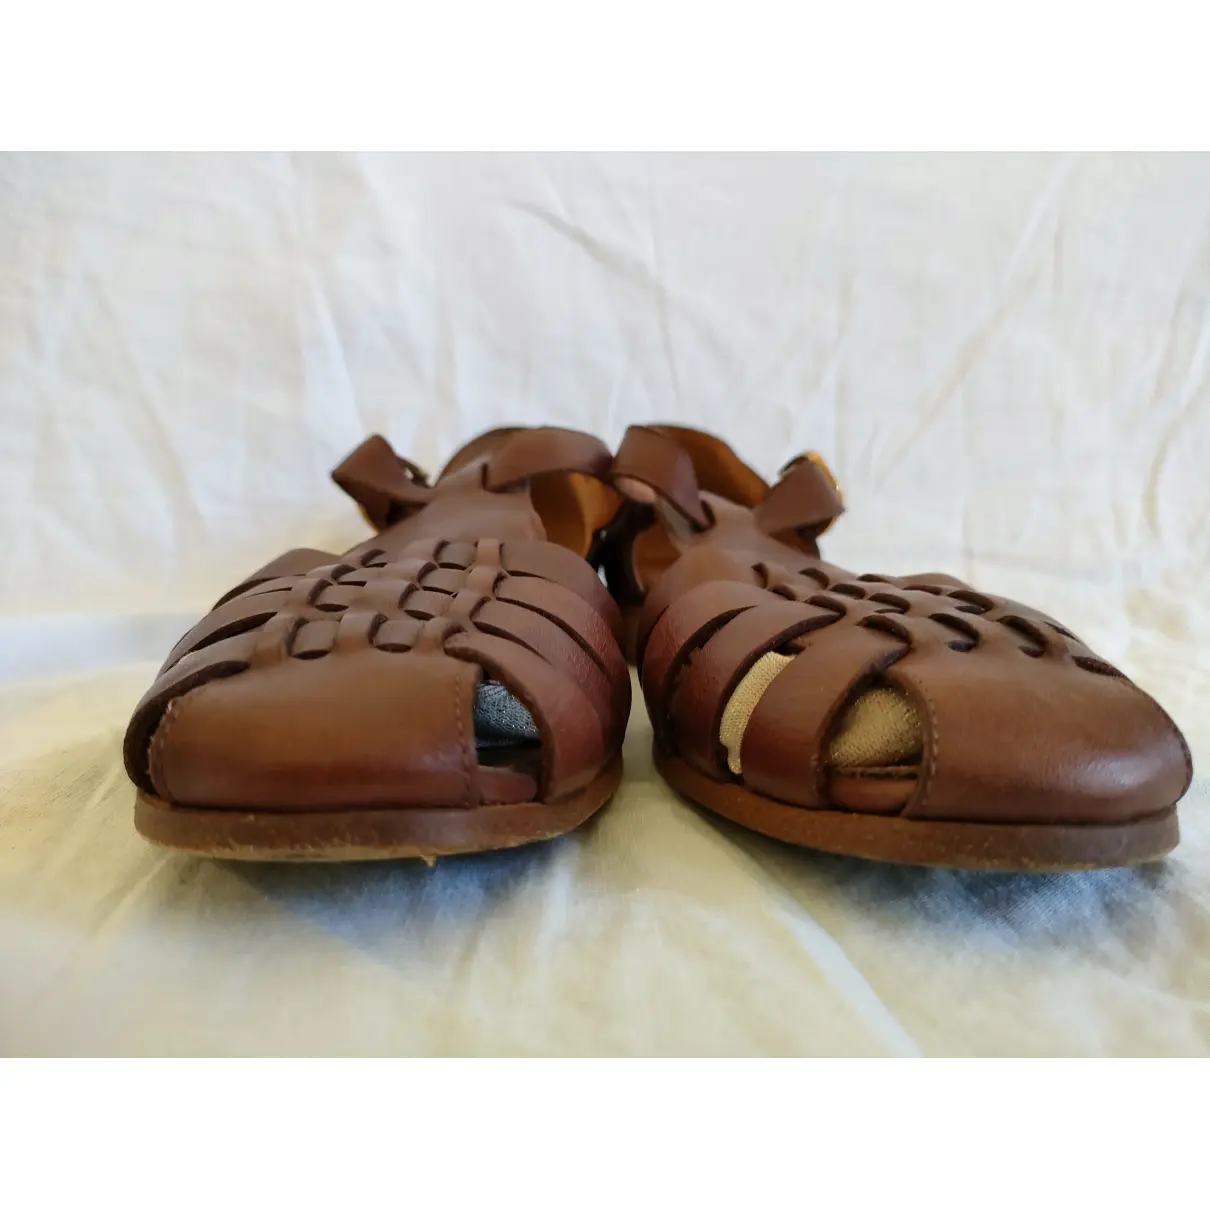 Buy Church's Leather sandals online - Vintage